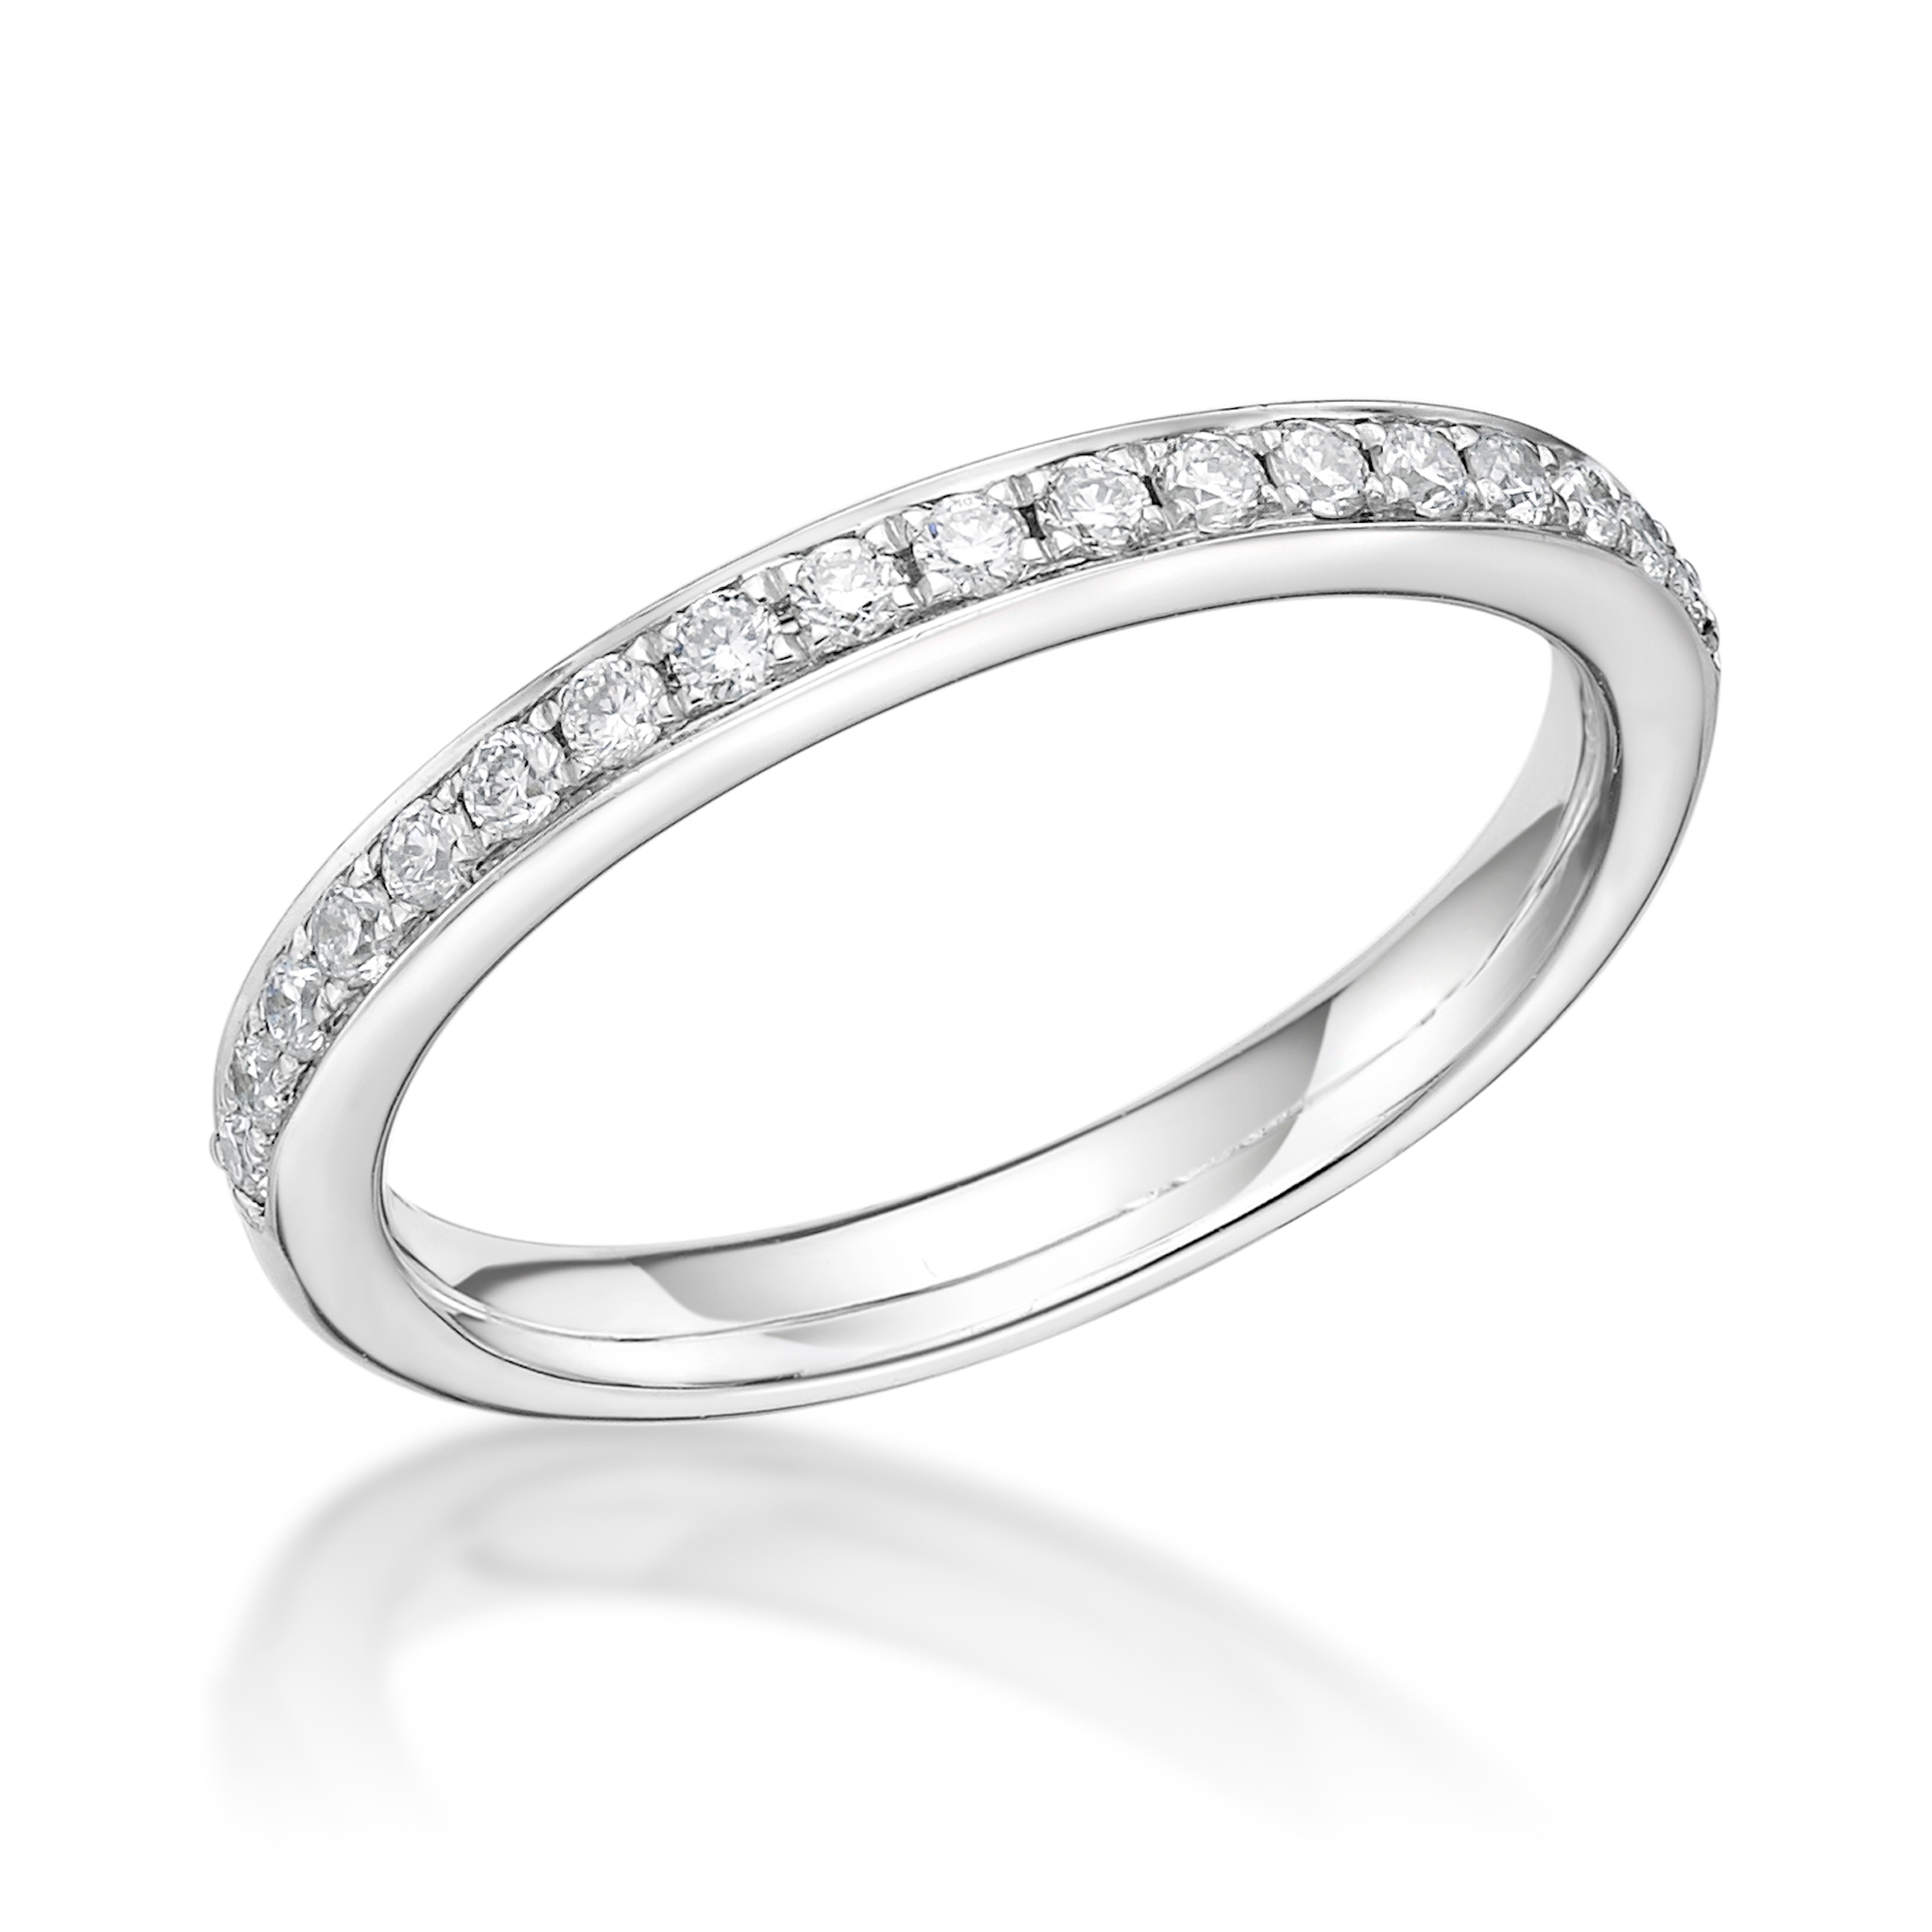 GRAIN SET ROUND BRILLIANT DIAMOND WEDDING ETERNITY RING